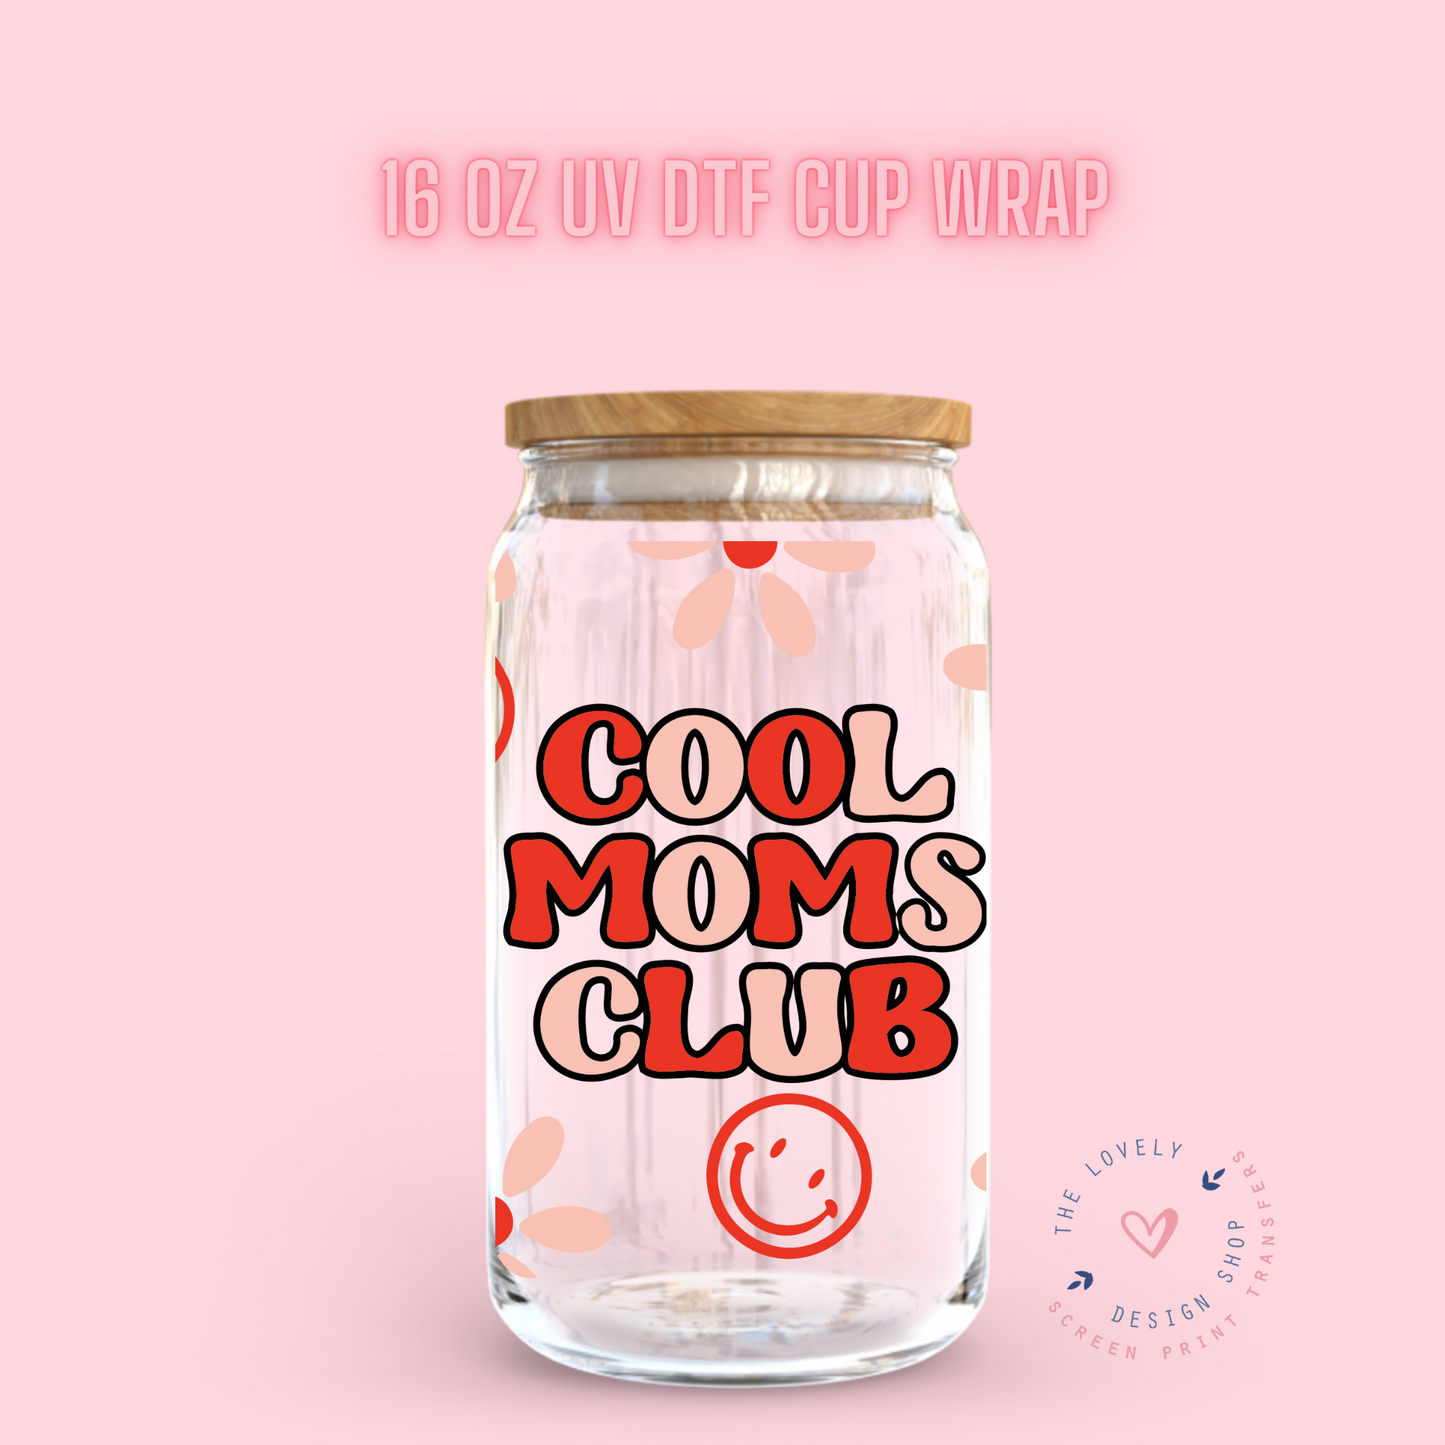 Cool Moms Club - UV DTF 16 oz Libbey Cup Wrap (Ready to Ship) Jan 15